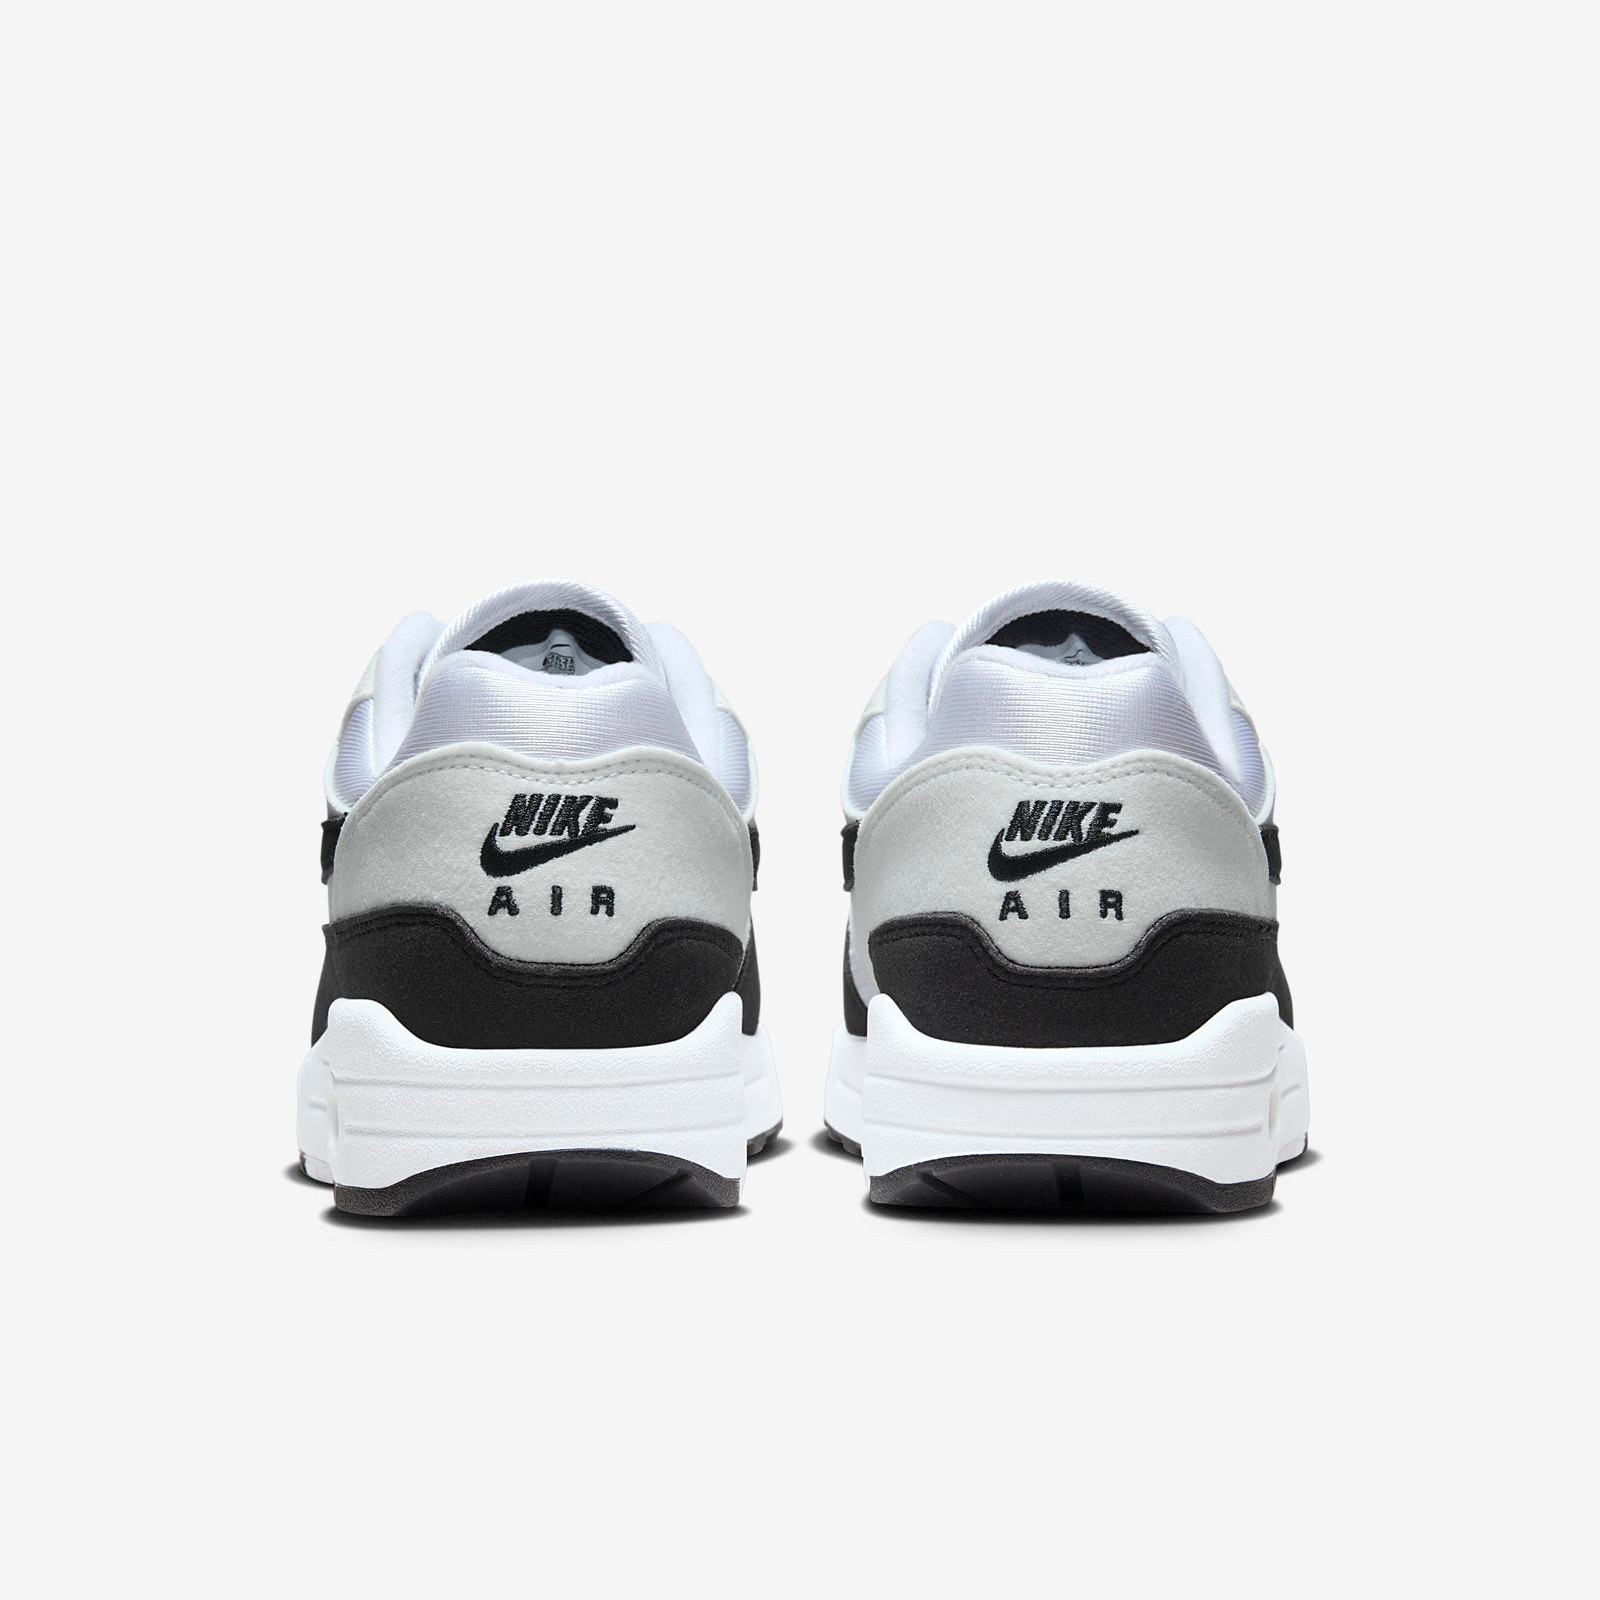 Nike Air Max 1
White / Black